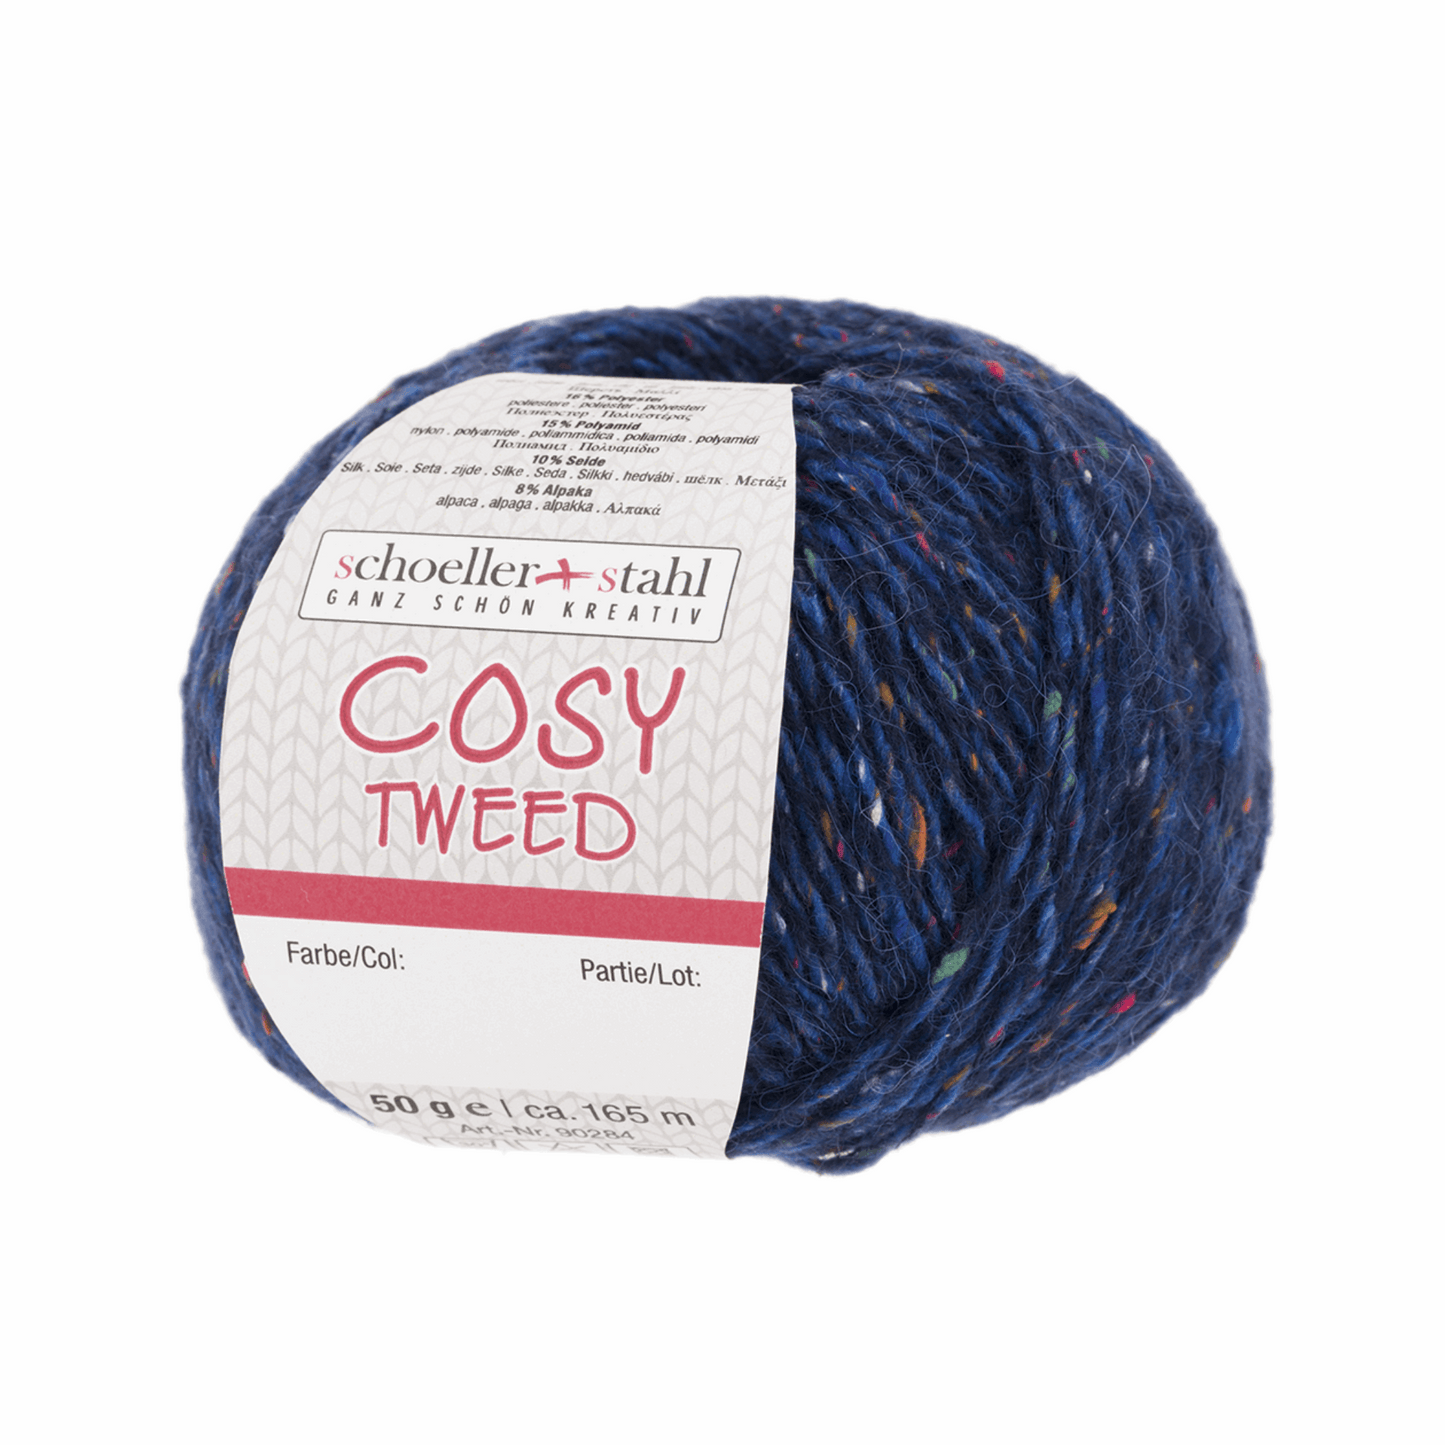 Cosy Tweed 50g, 90284, Farbe 12, dunkelblau